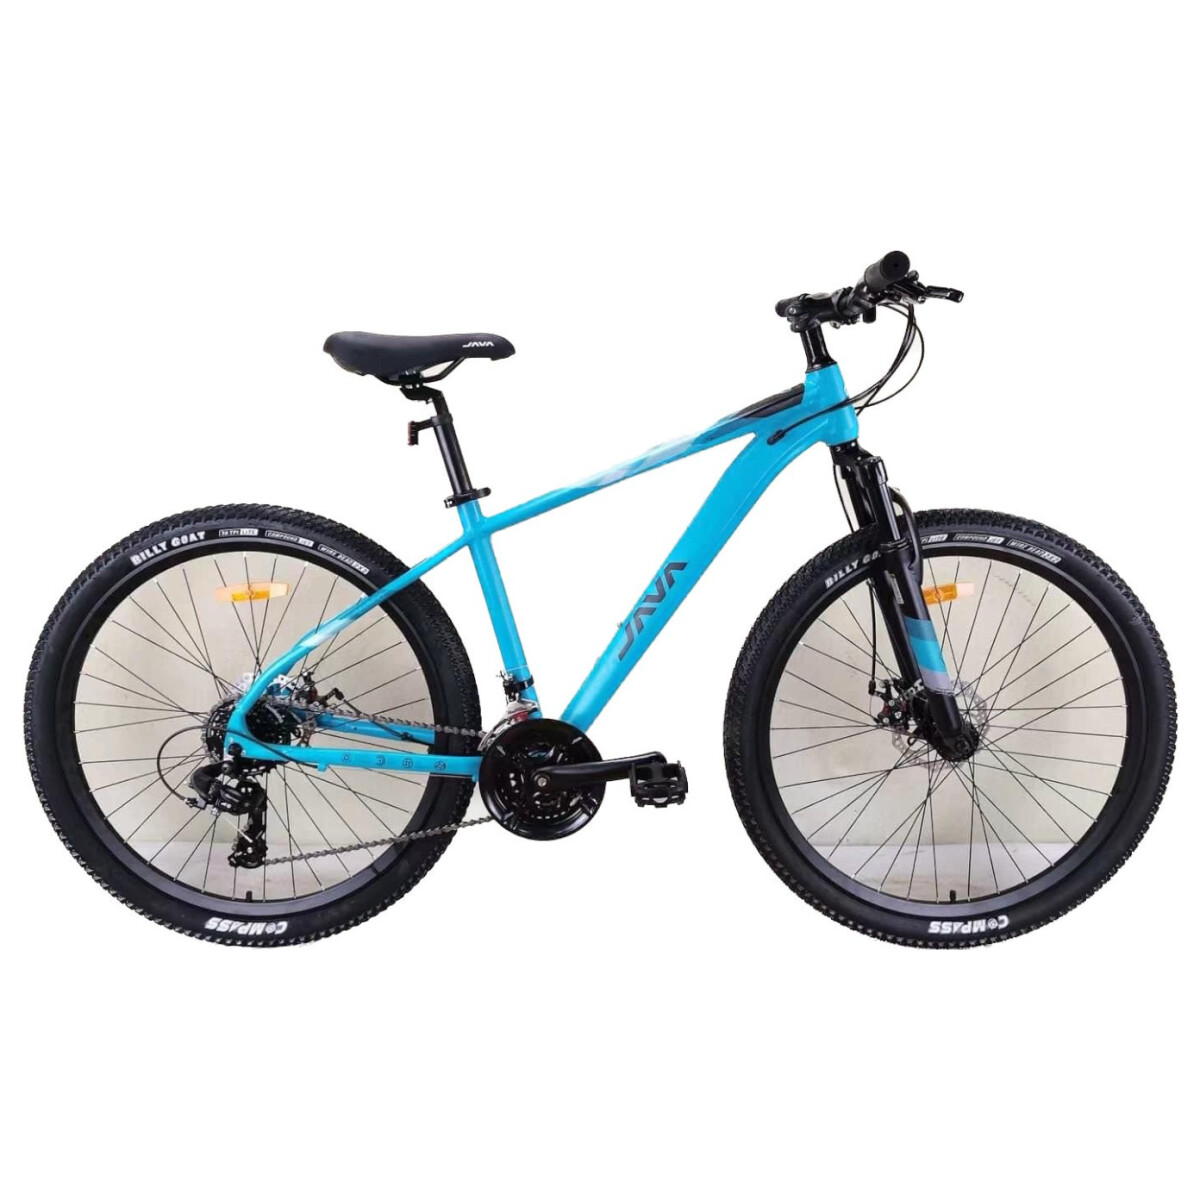 Java - Bicicleta Varco. Shimano 21V Talle 17" - Color: Azul. - 001 